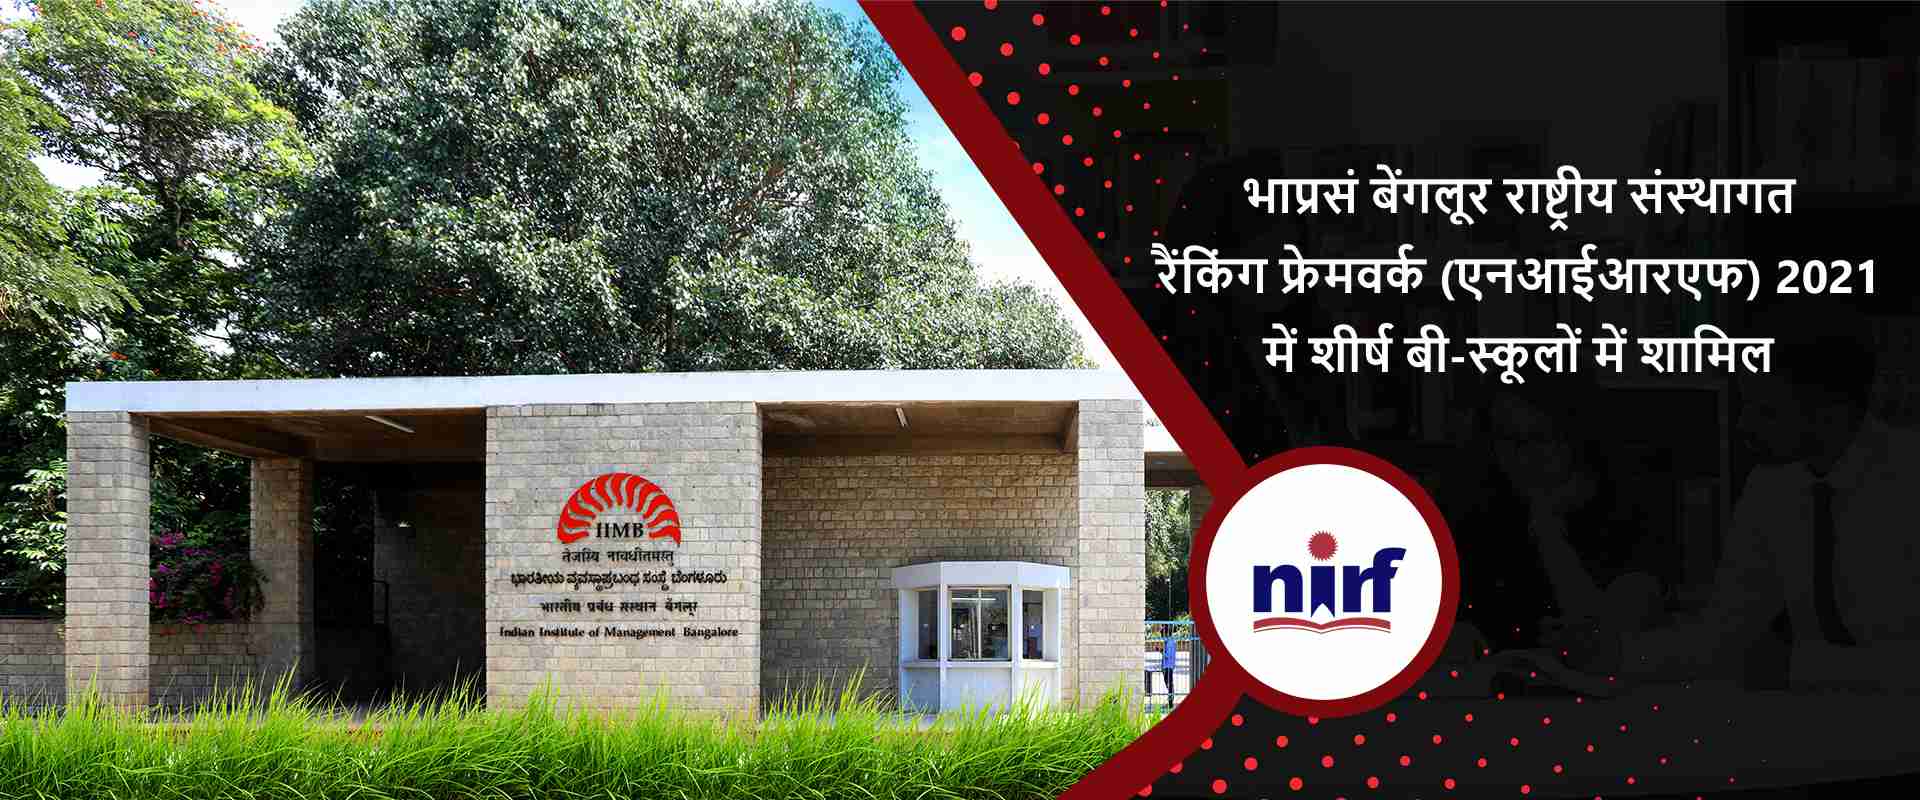 IIM Bangalore features among top B-schools in NIRF 2021